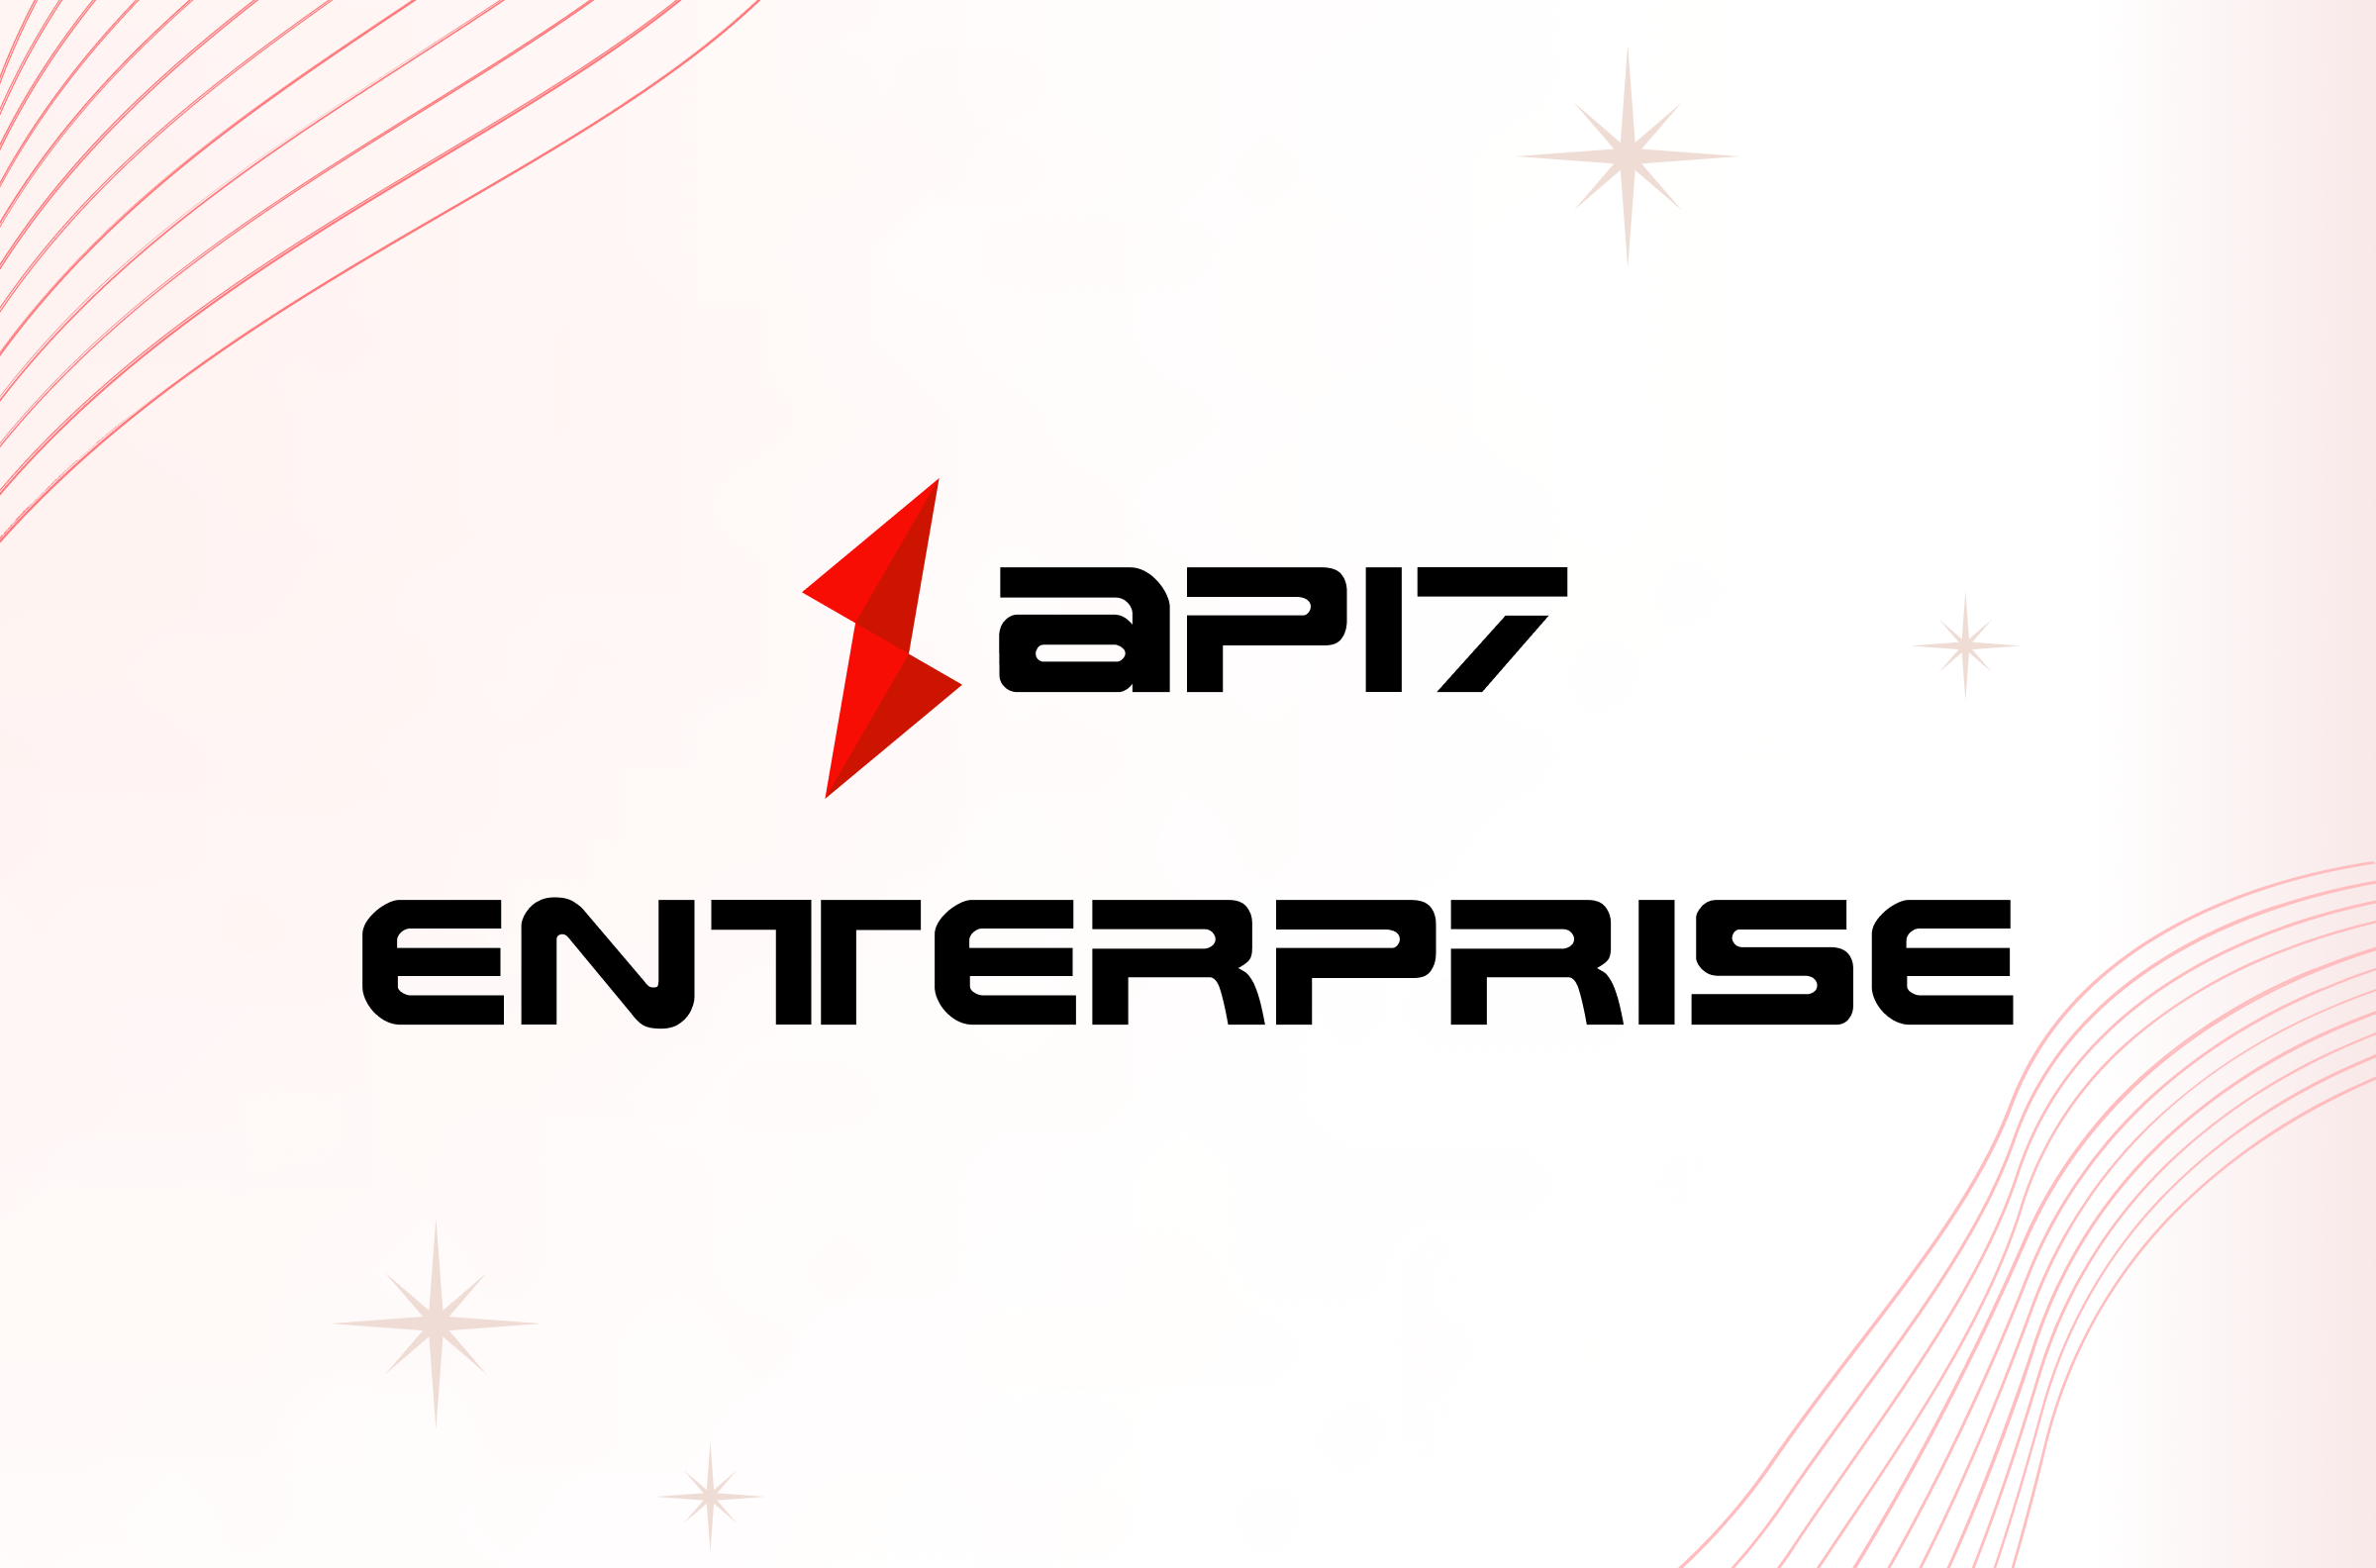 API7 Enterprise Streamlines API Traffic Management by Traffic Labeling